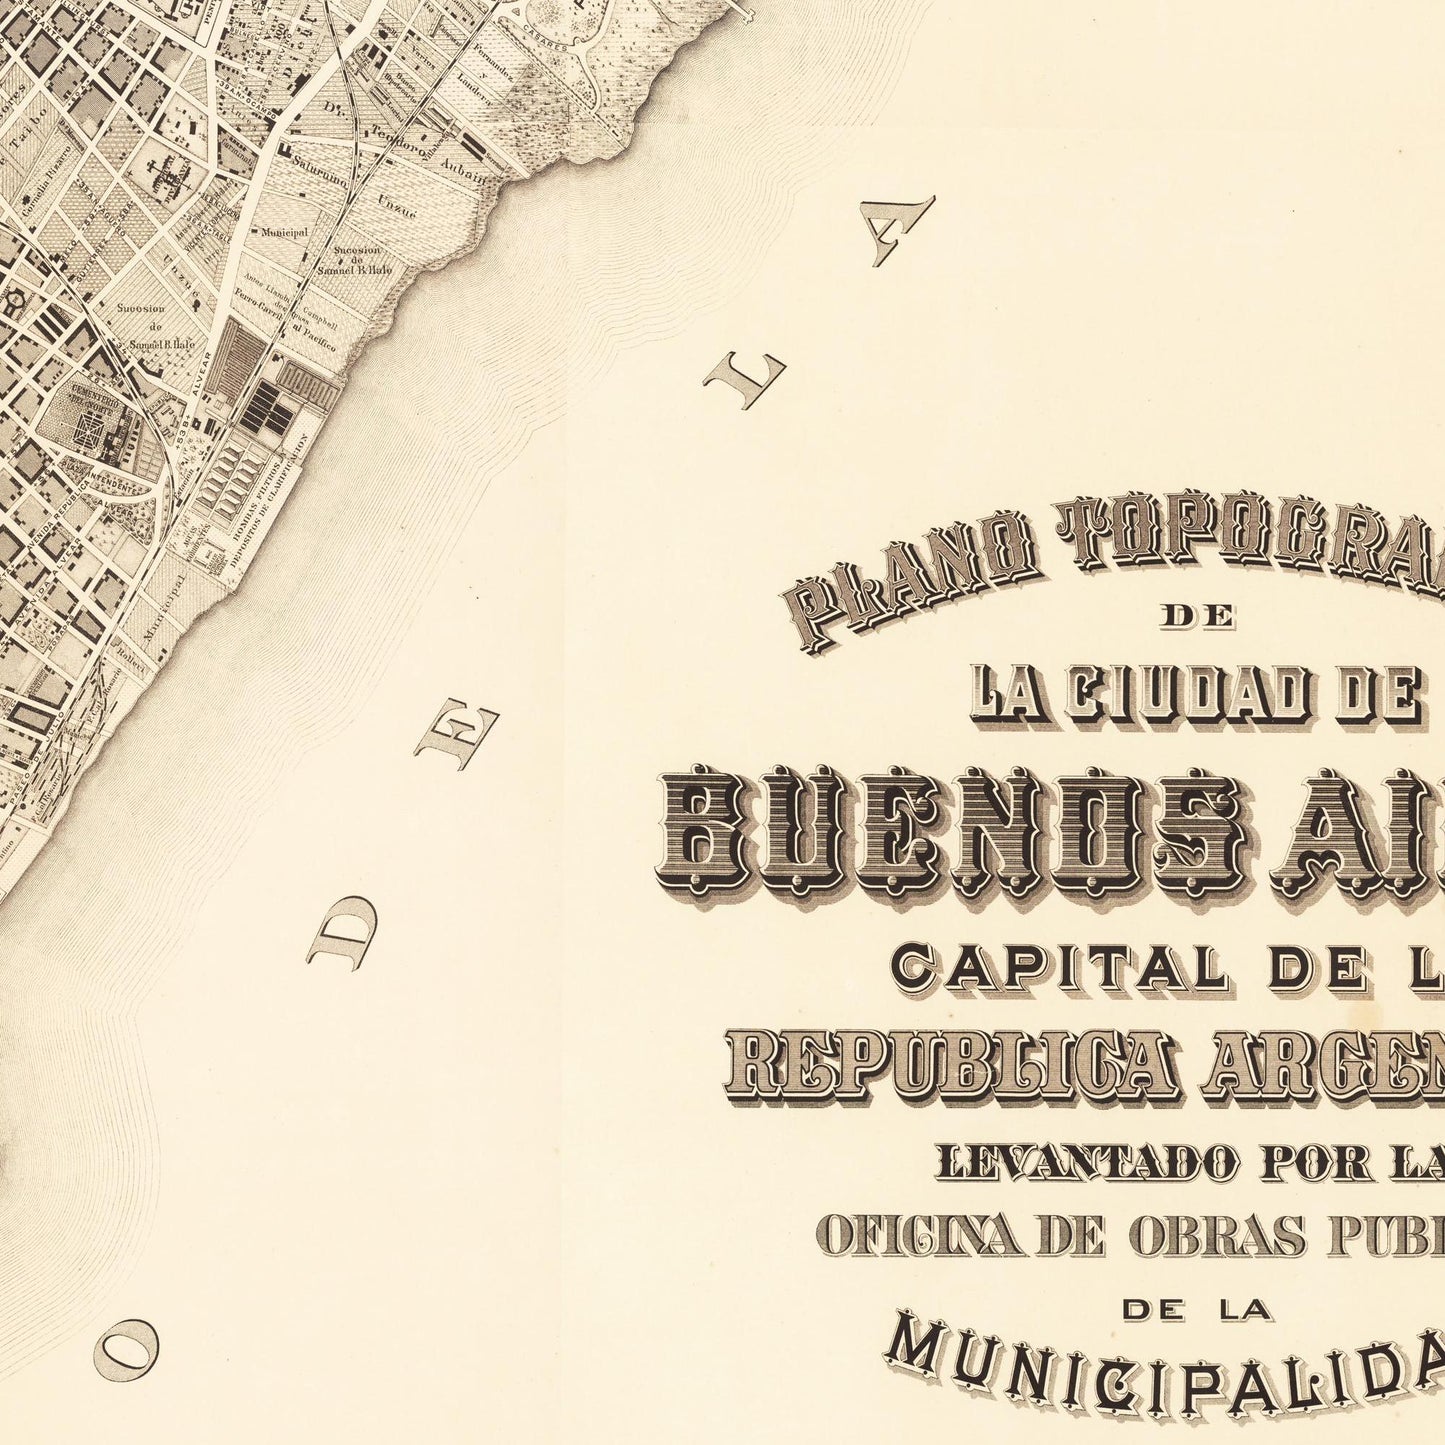 Historischer Stadtplan Buenos Aires um 1895